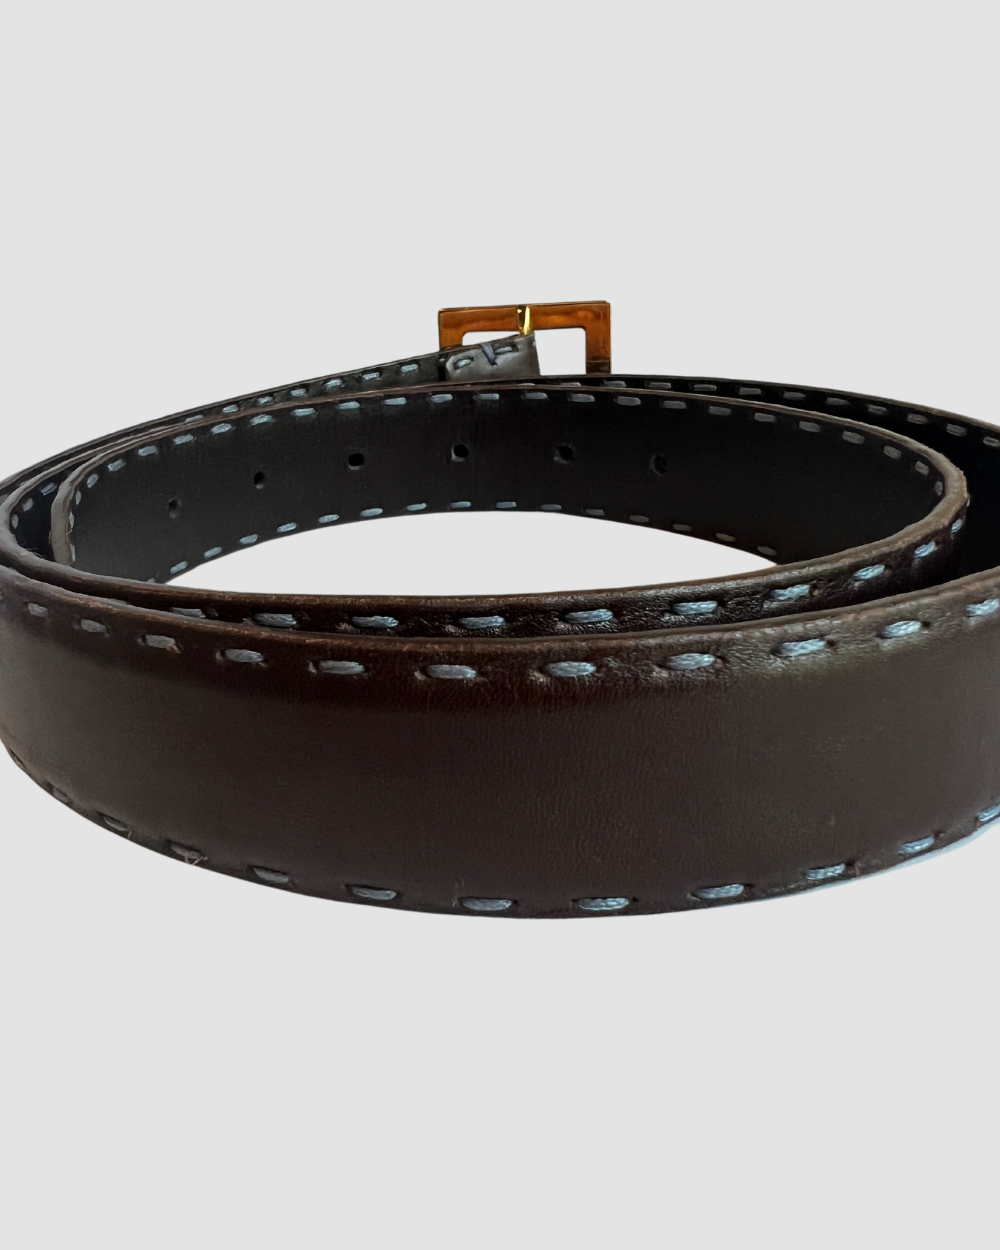 Dolce & Gabbana Brown Stitched Leather belt, 100